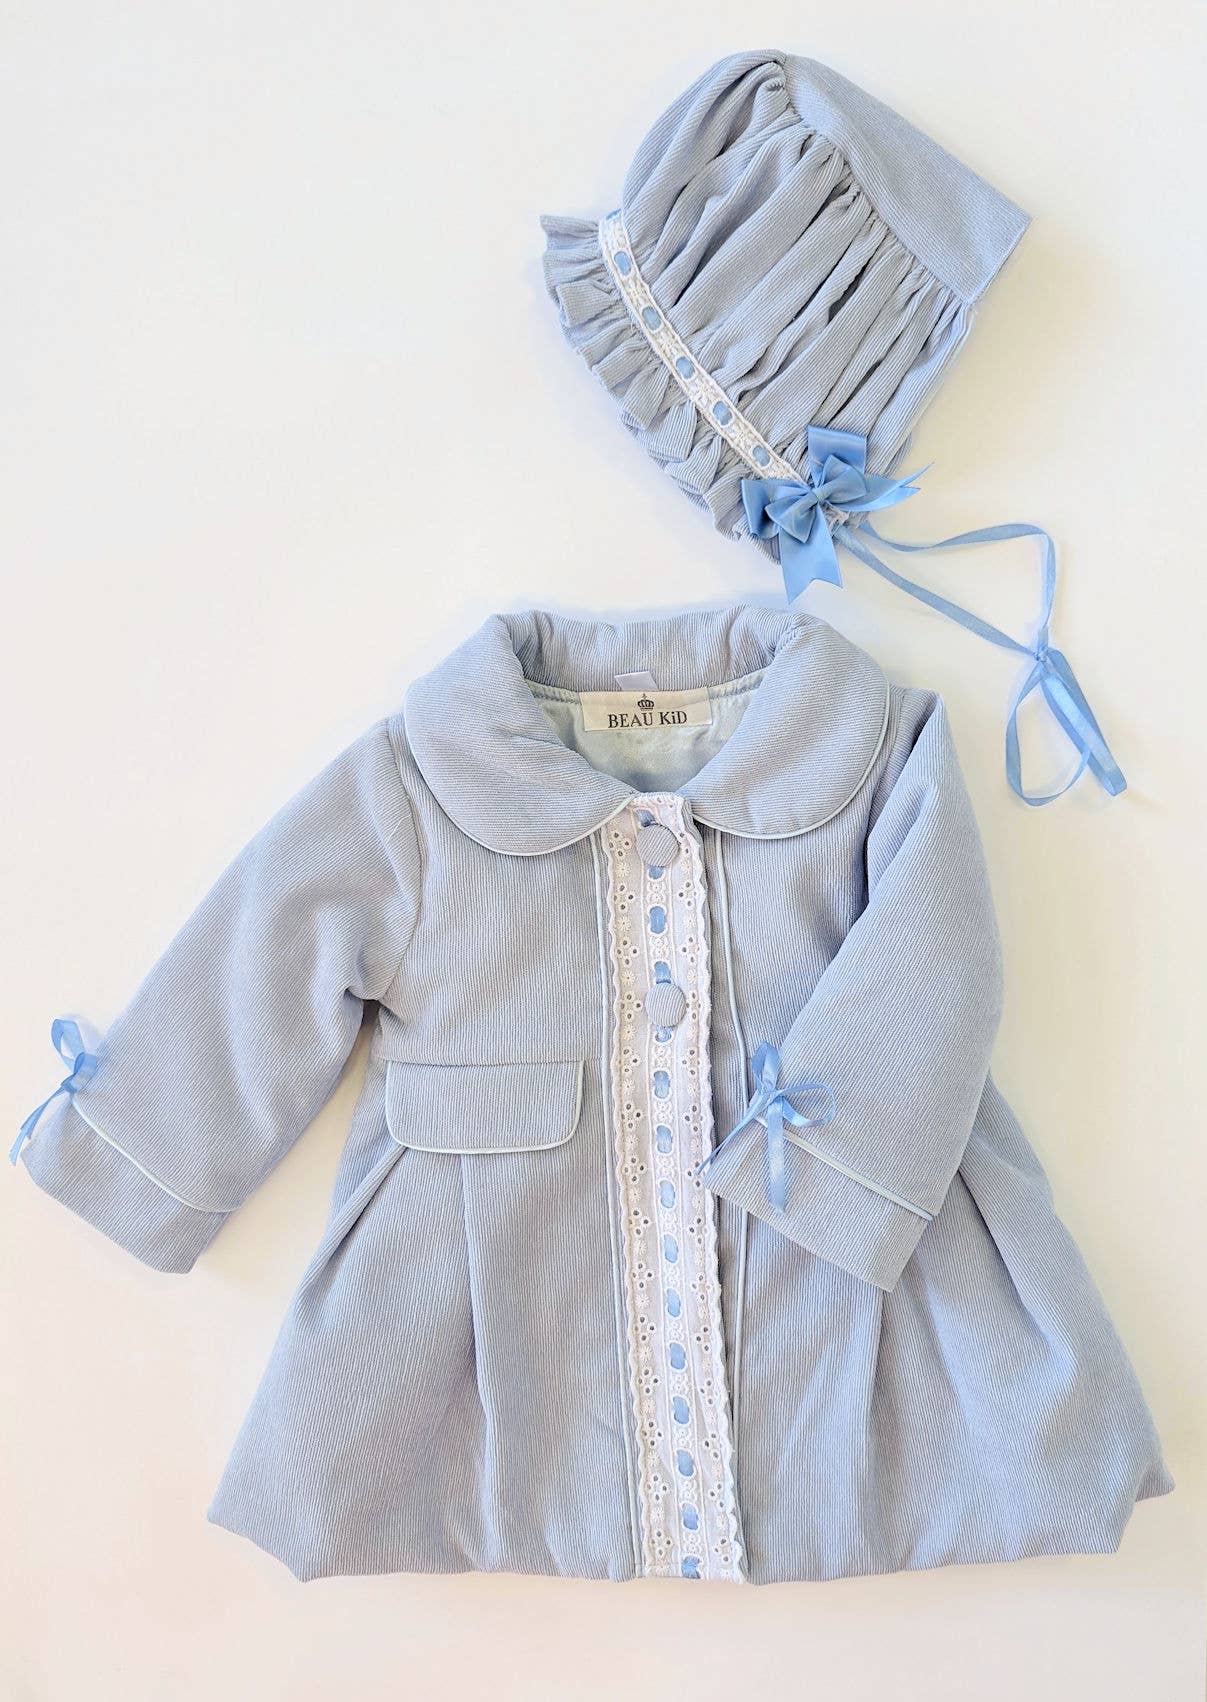 Beau Kids baby soft cord dress coat with matching bonnet